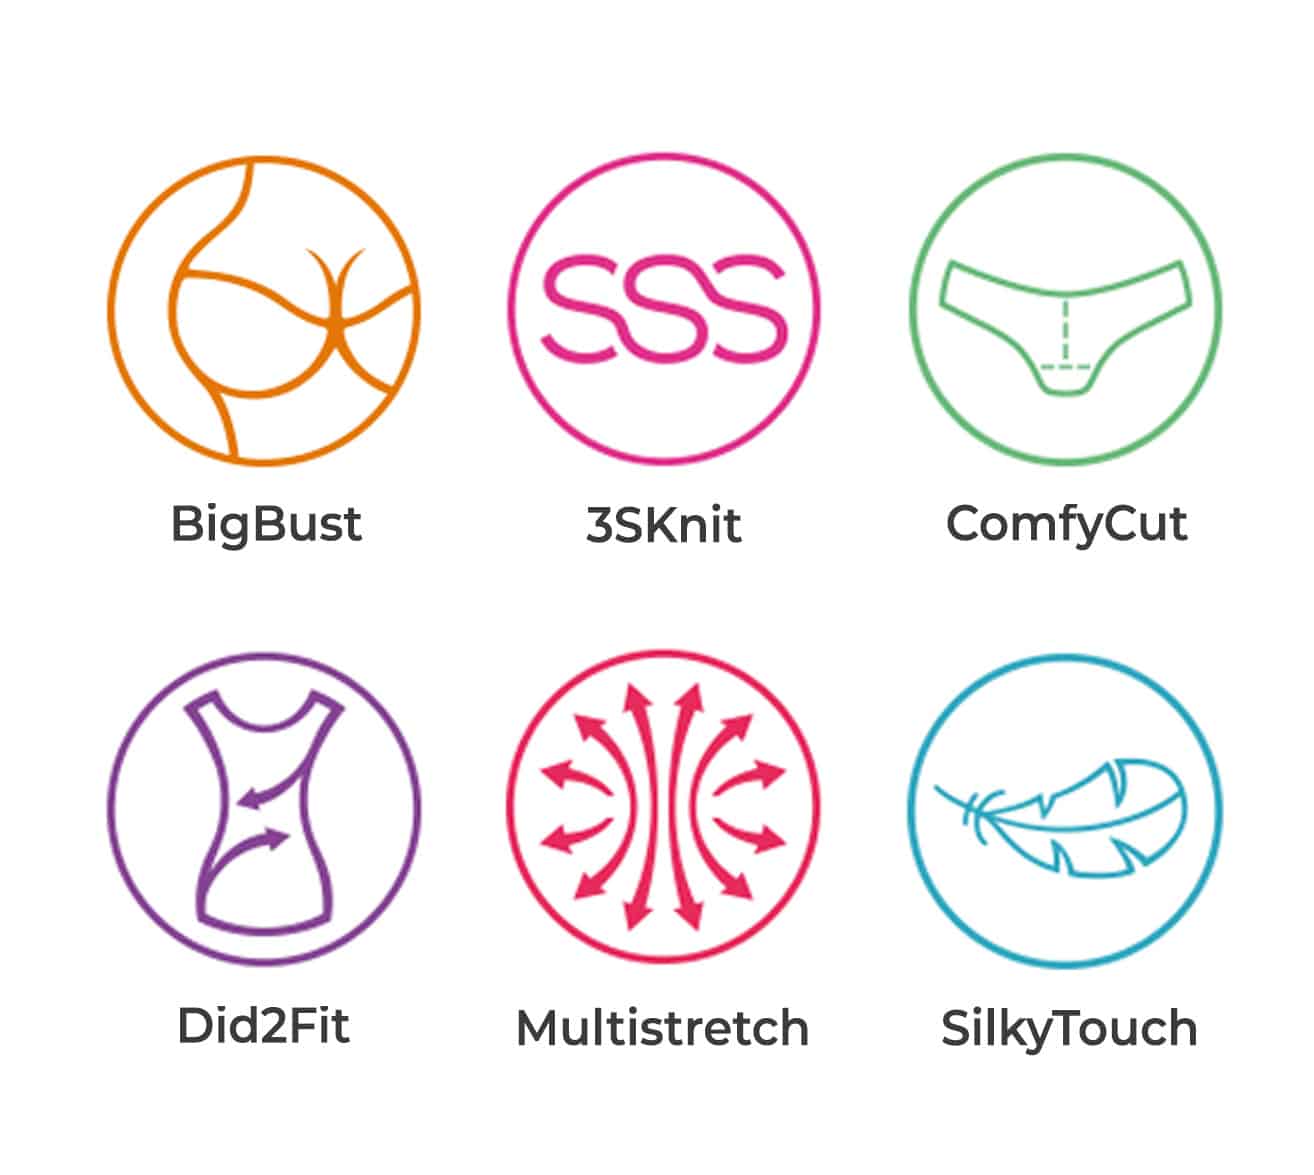 Schemat pokazuje 6 oznaczeń cech bielizny Obsessive: BigBust, 3SKnit, ComfyCut, Did2Fit, Multistretch i SilkyTouch.